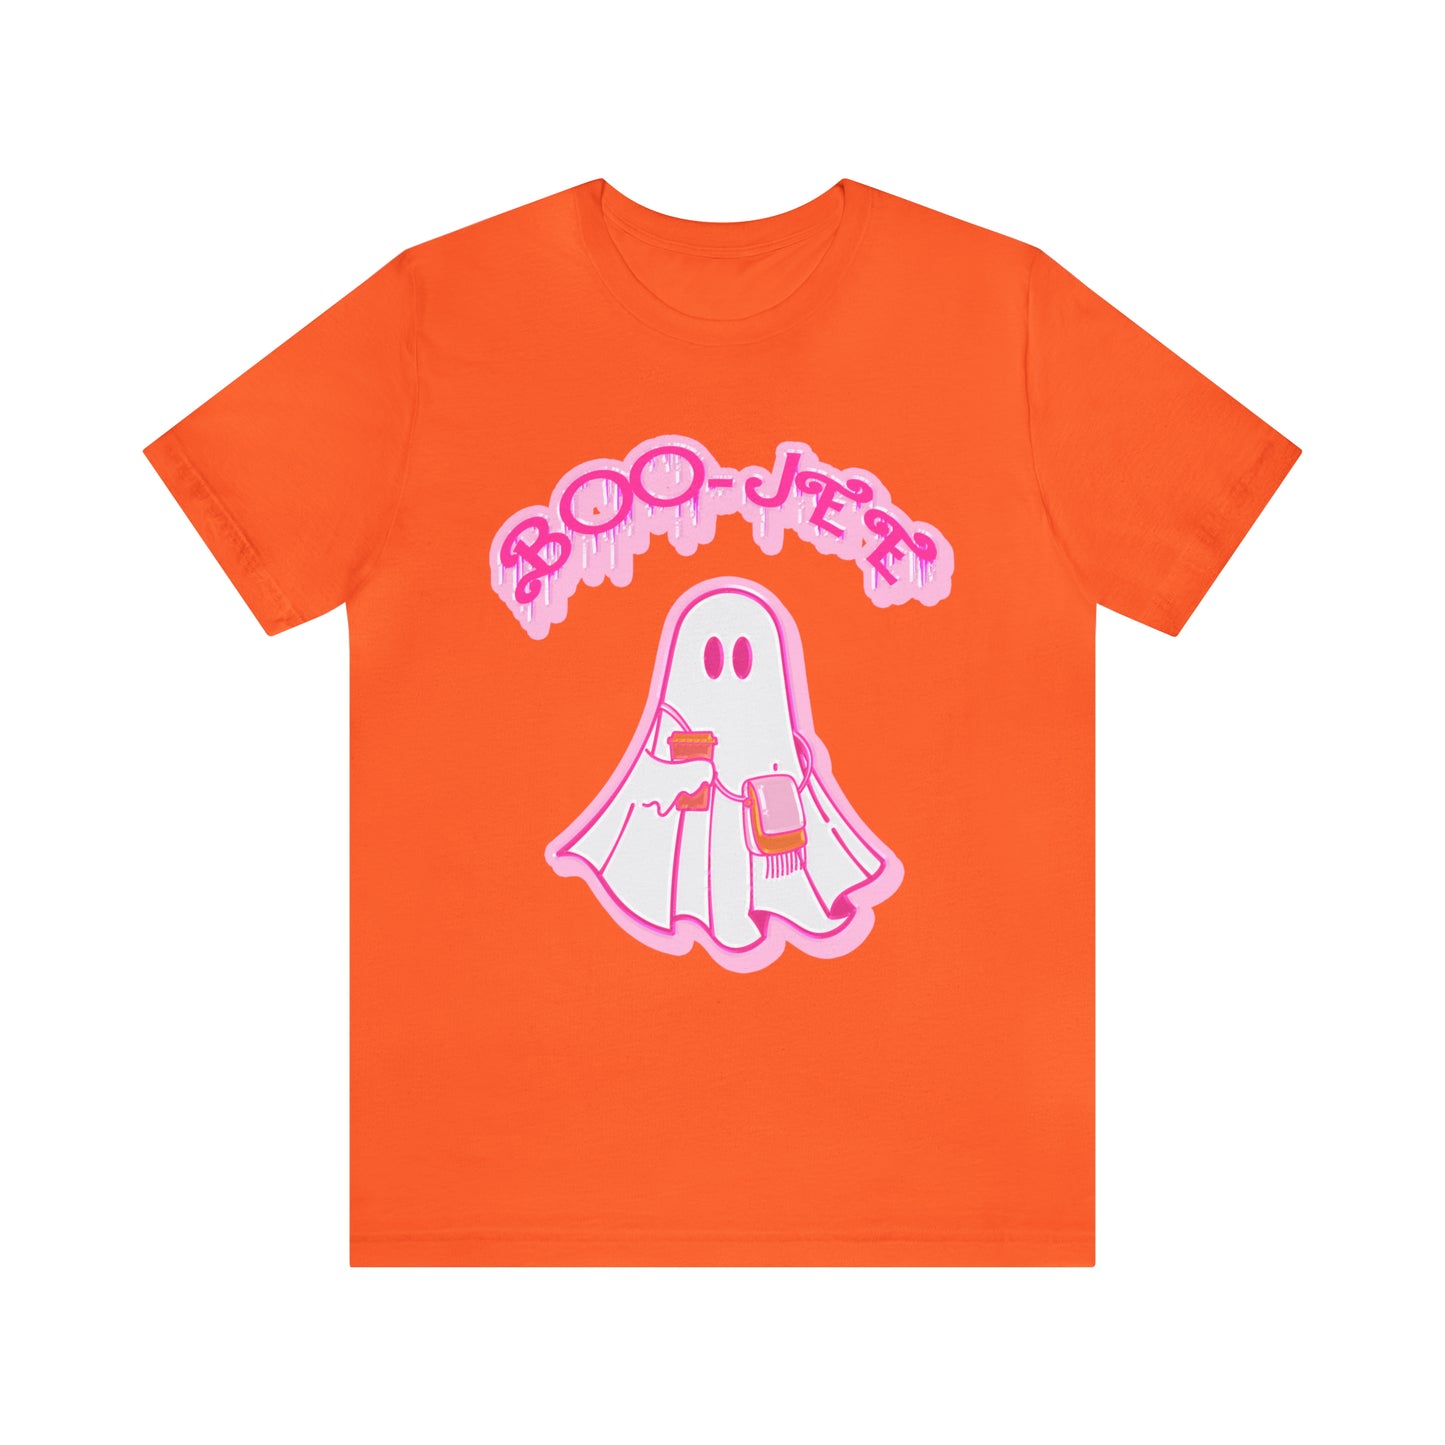 Boo Jee Shirt, Pink Ghost Boo Jee Shirt, Spooky Ghost Shirt, Spooky Season Ghost Shirt, Spooky Vibes Shirt, Halloween Ghost Shirt, T835